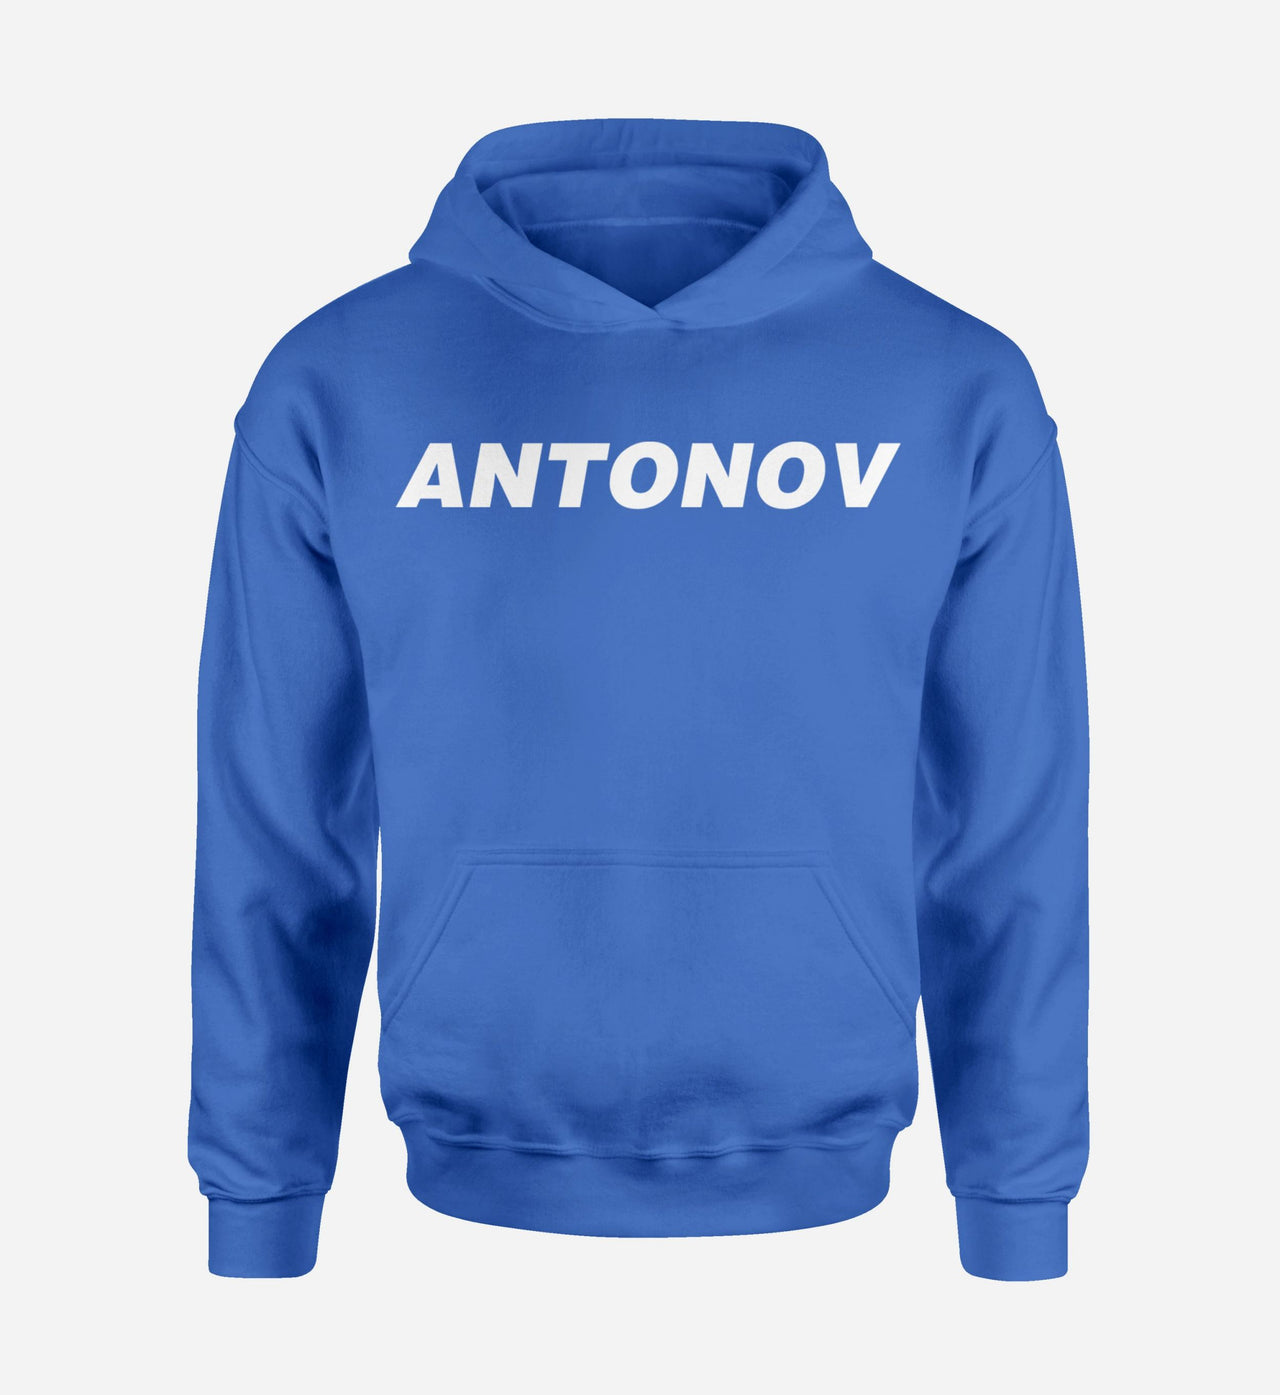 Antonov & Text Designed Hoodies